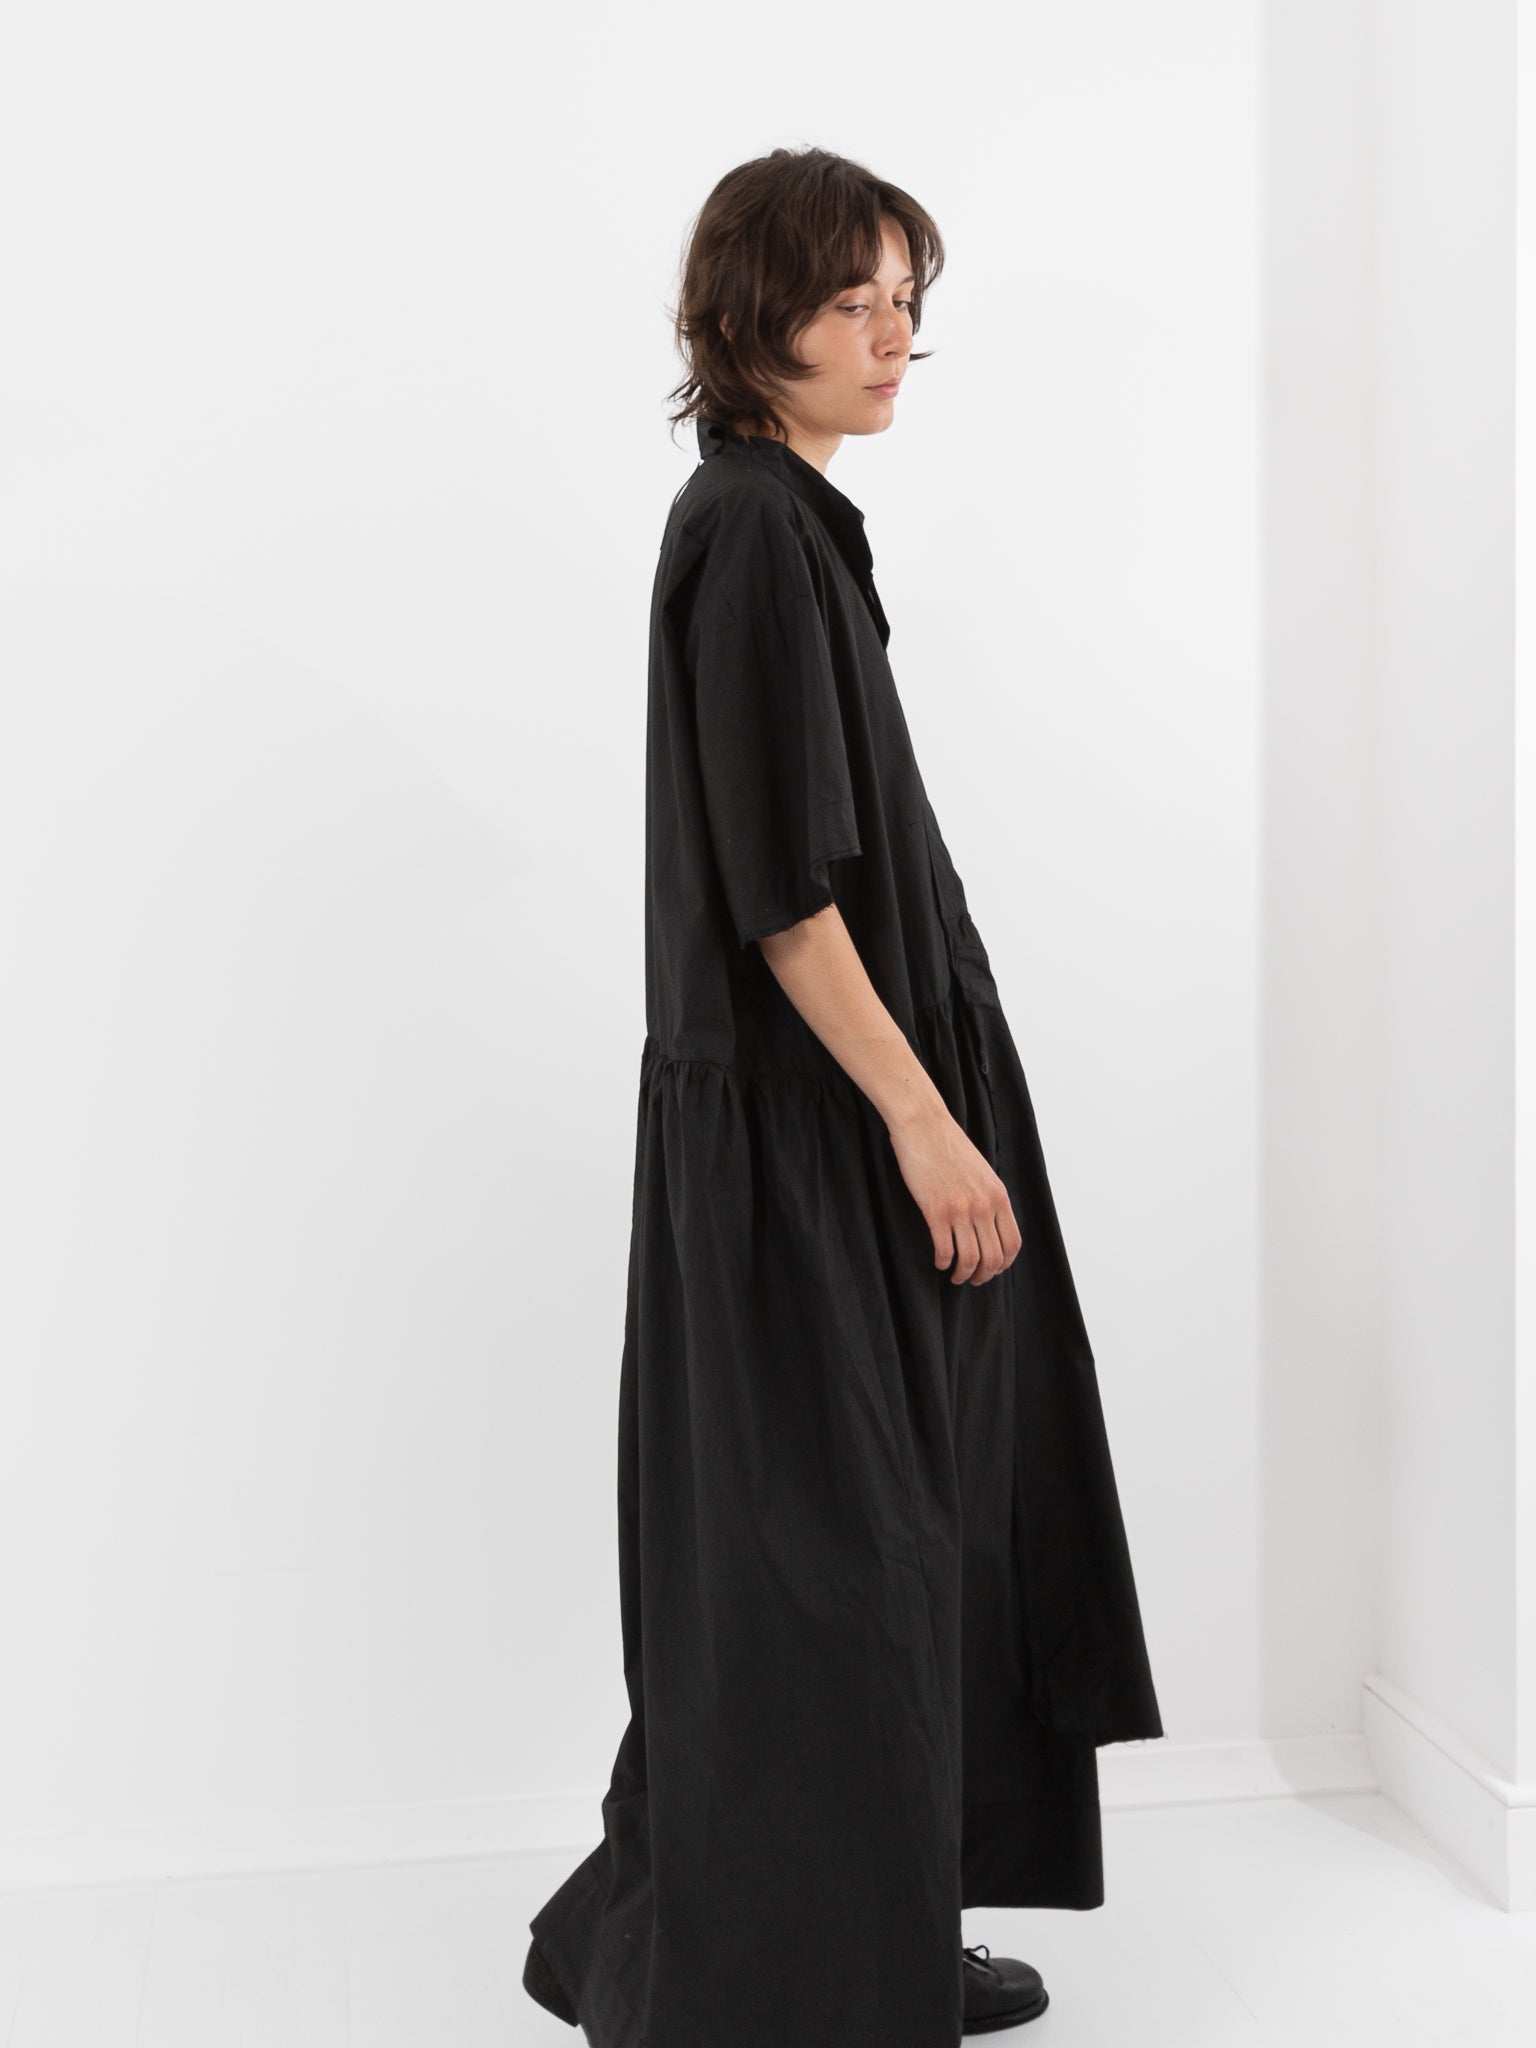 Serie Numerica Boxy Dress, Black - Worthwhile, Inc.